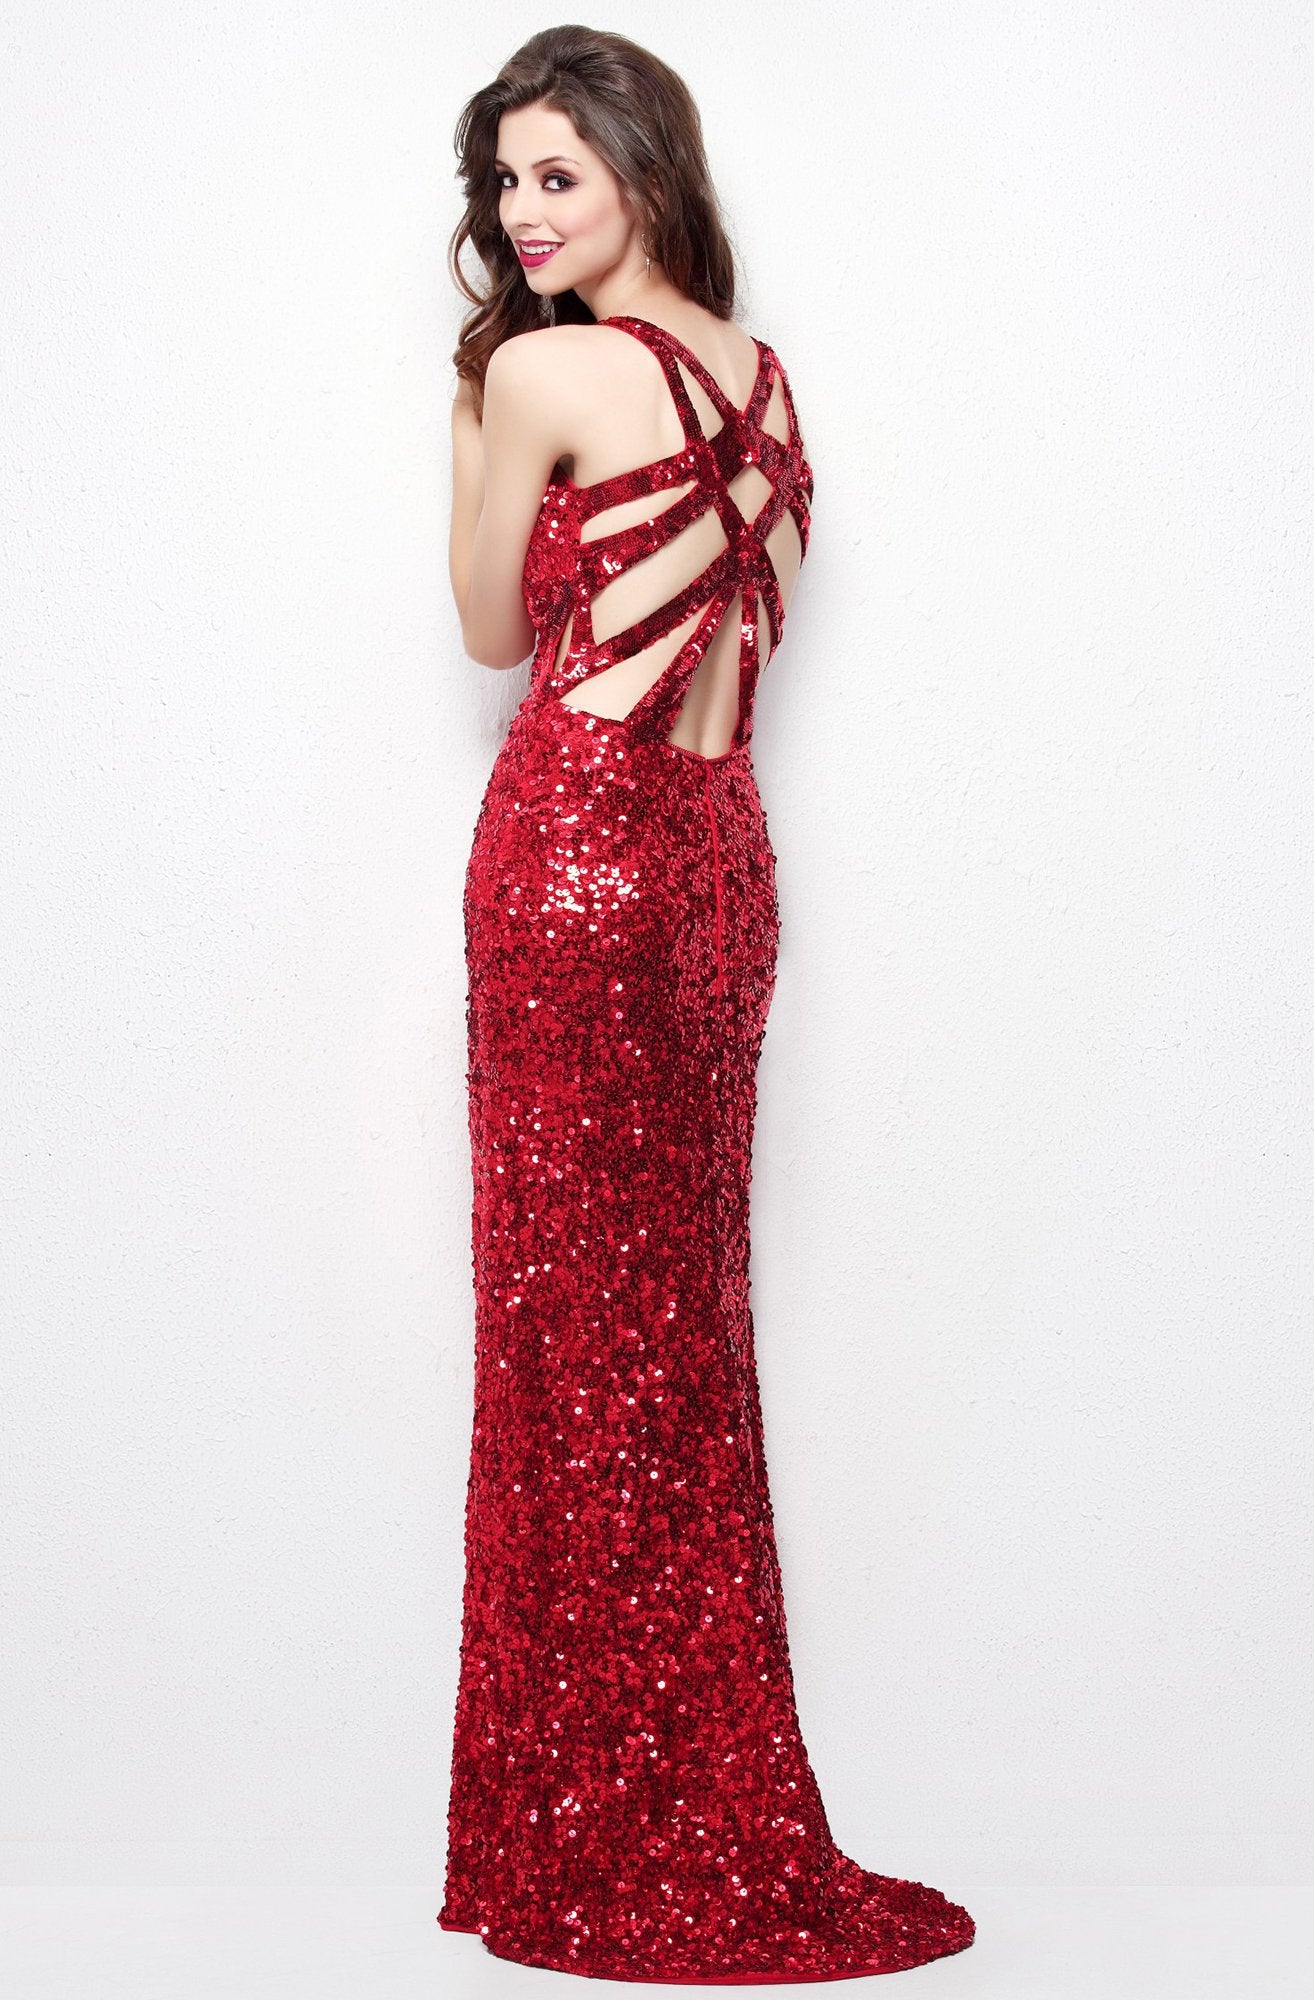 Primavera Couture - Vibrant sequined spaghetti strapped gown 9877 in Red